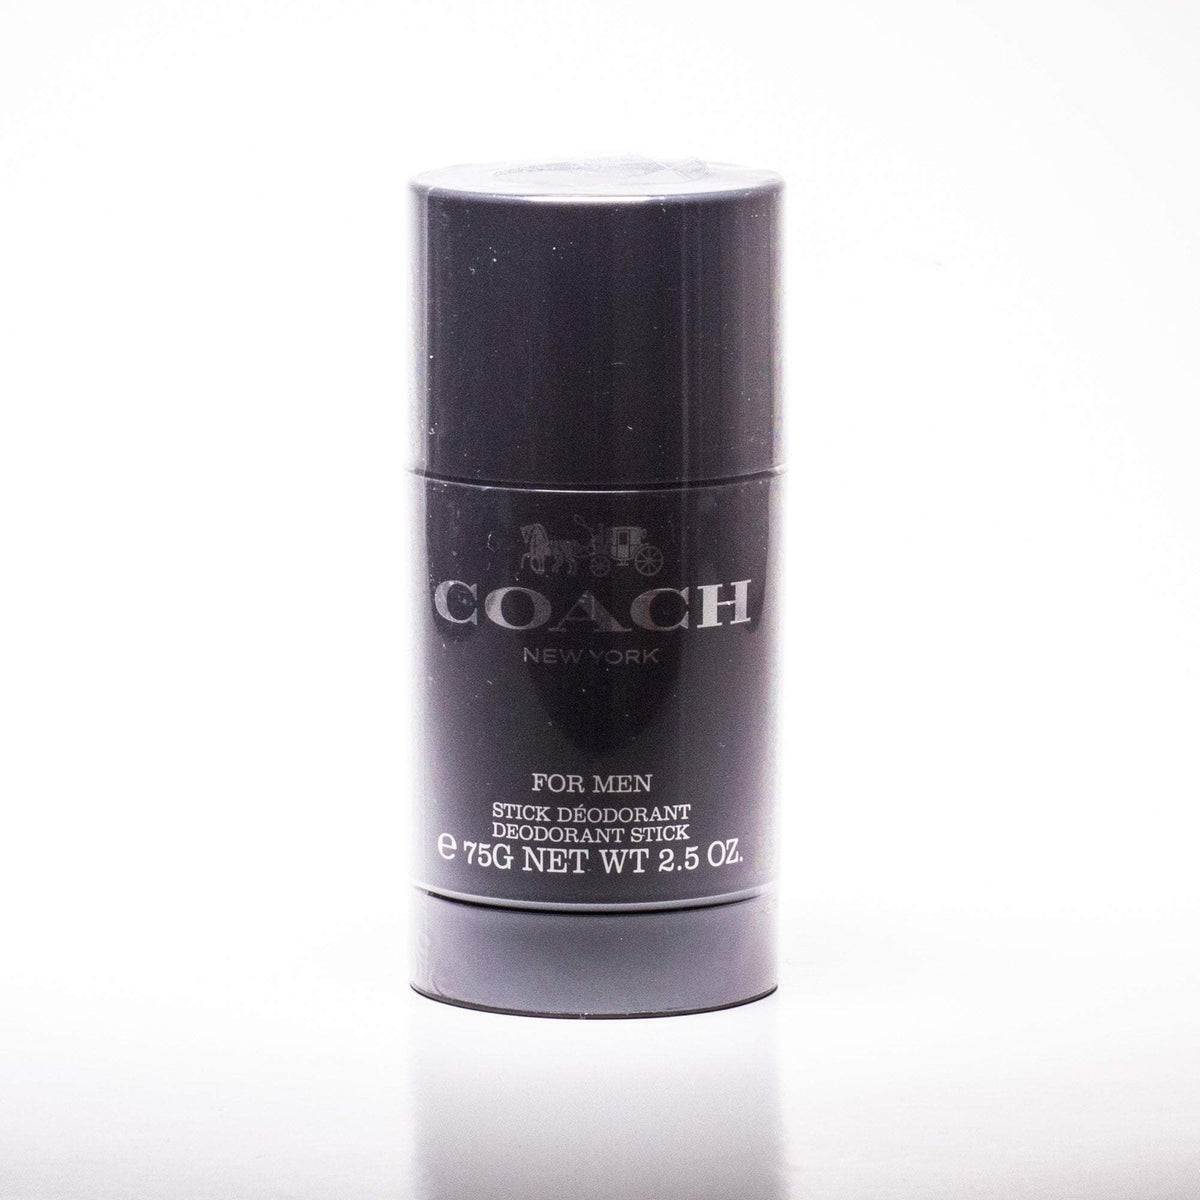 Coach Deodorant for Men by Coach